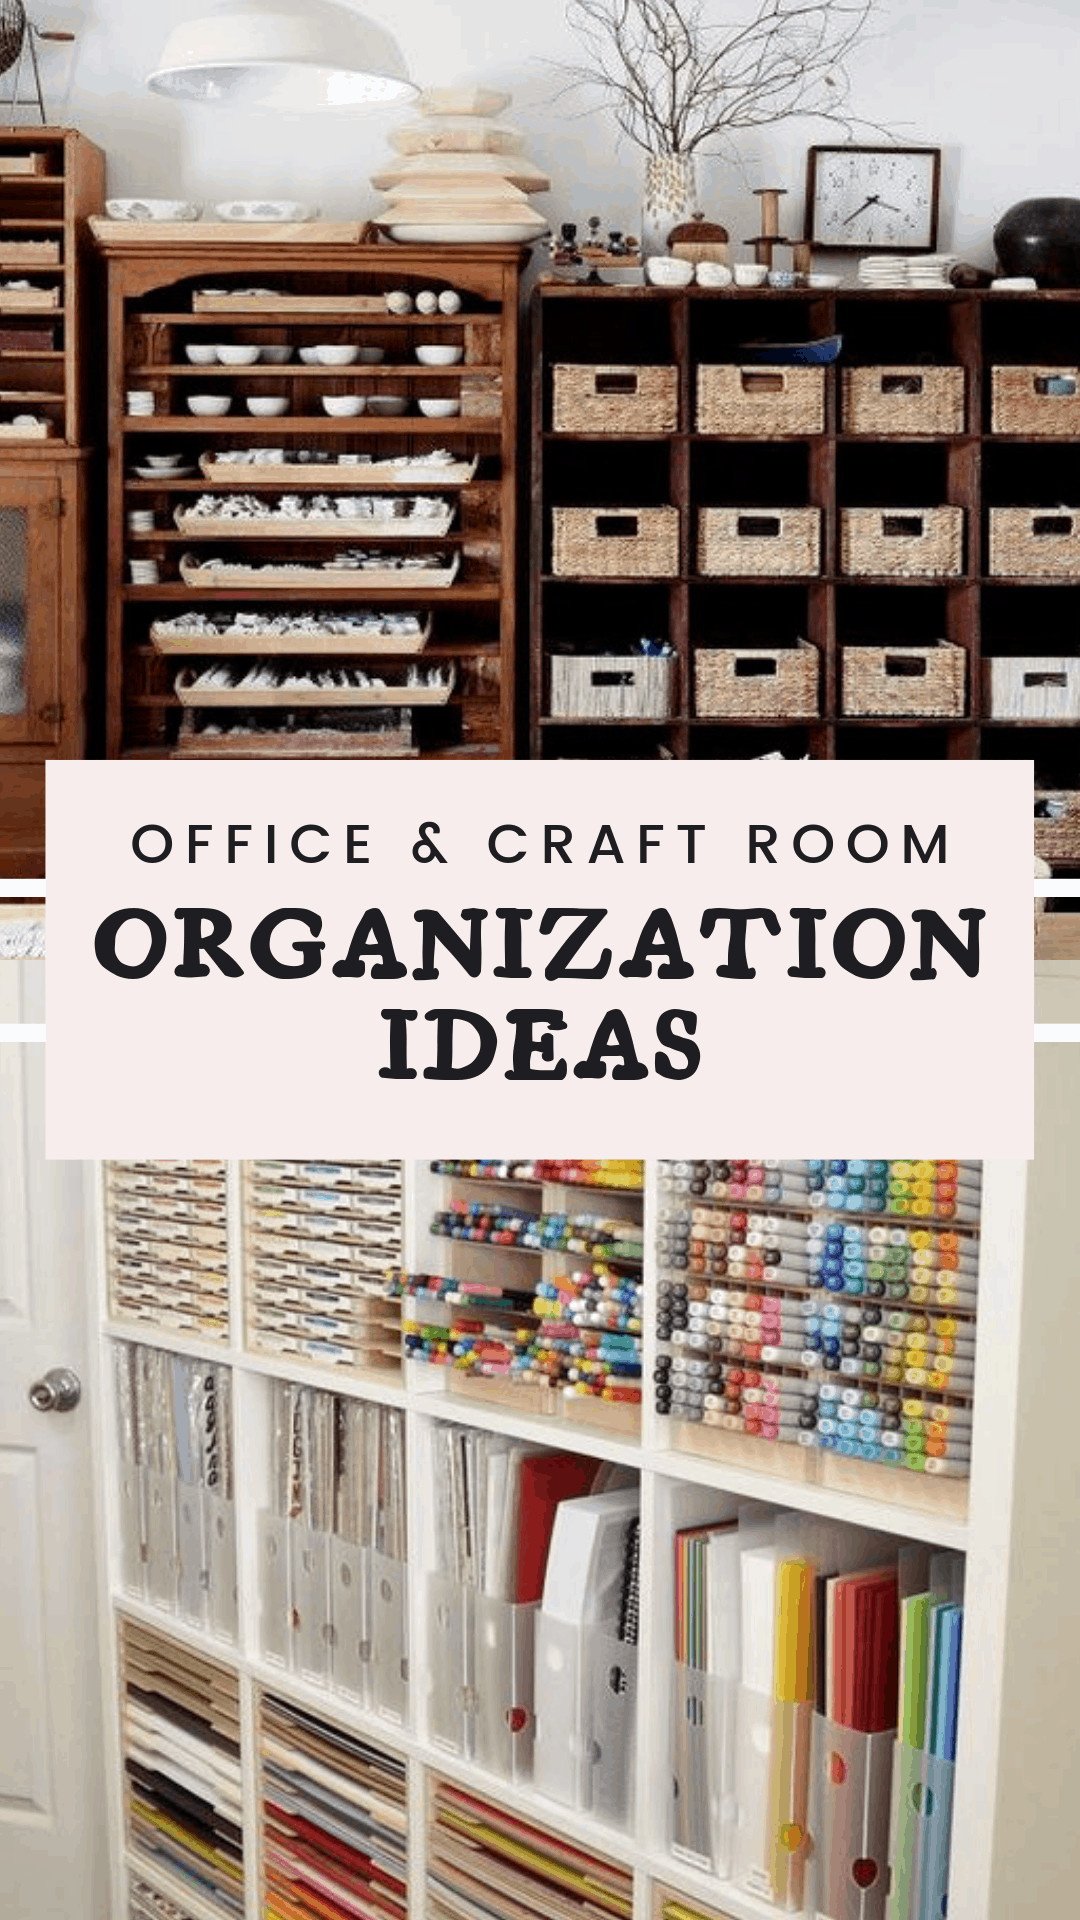 Craft Room Organization Ideas
 15 Stunning fice & Craft Room Organization Ideas